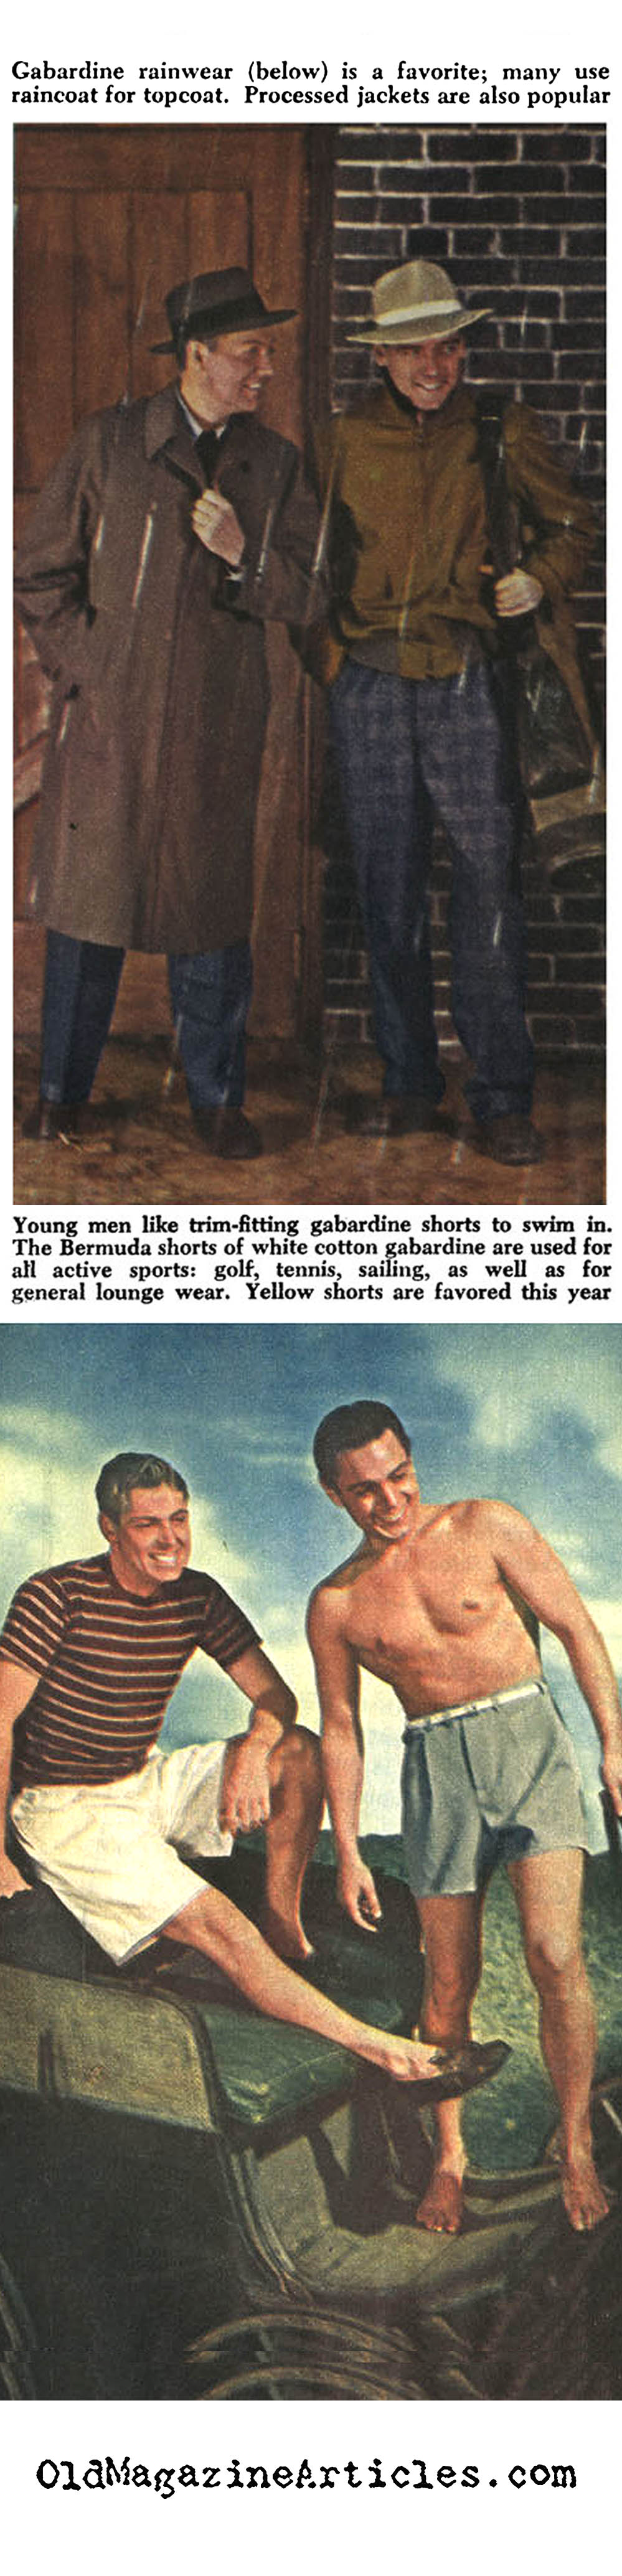 1940's Sportswear for Men (Collier's Magazine, 1945)